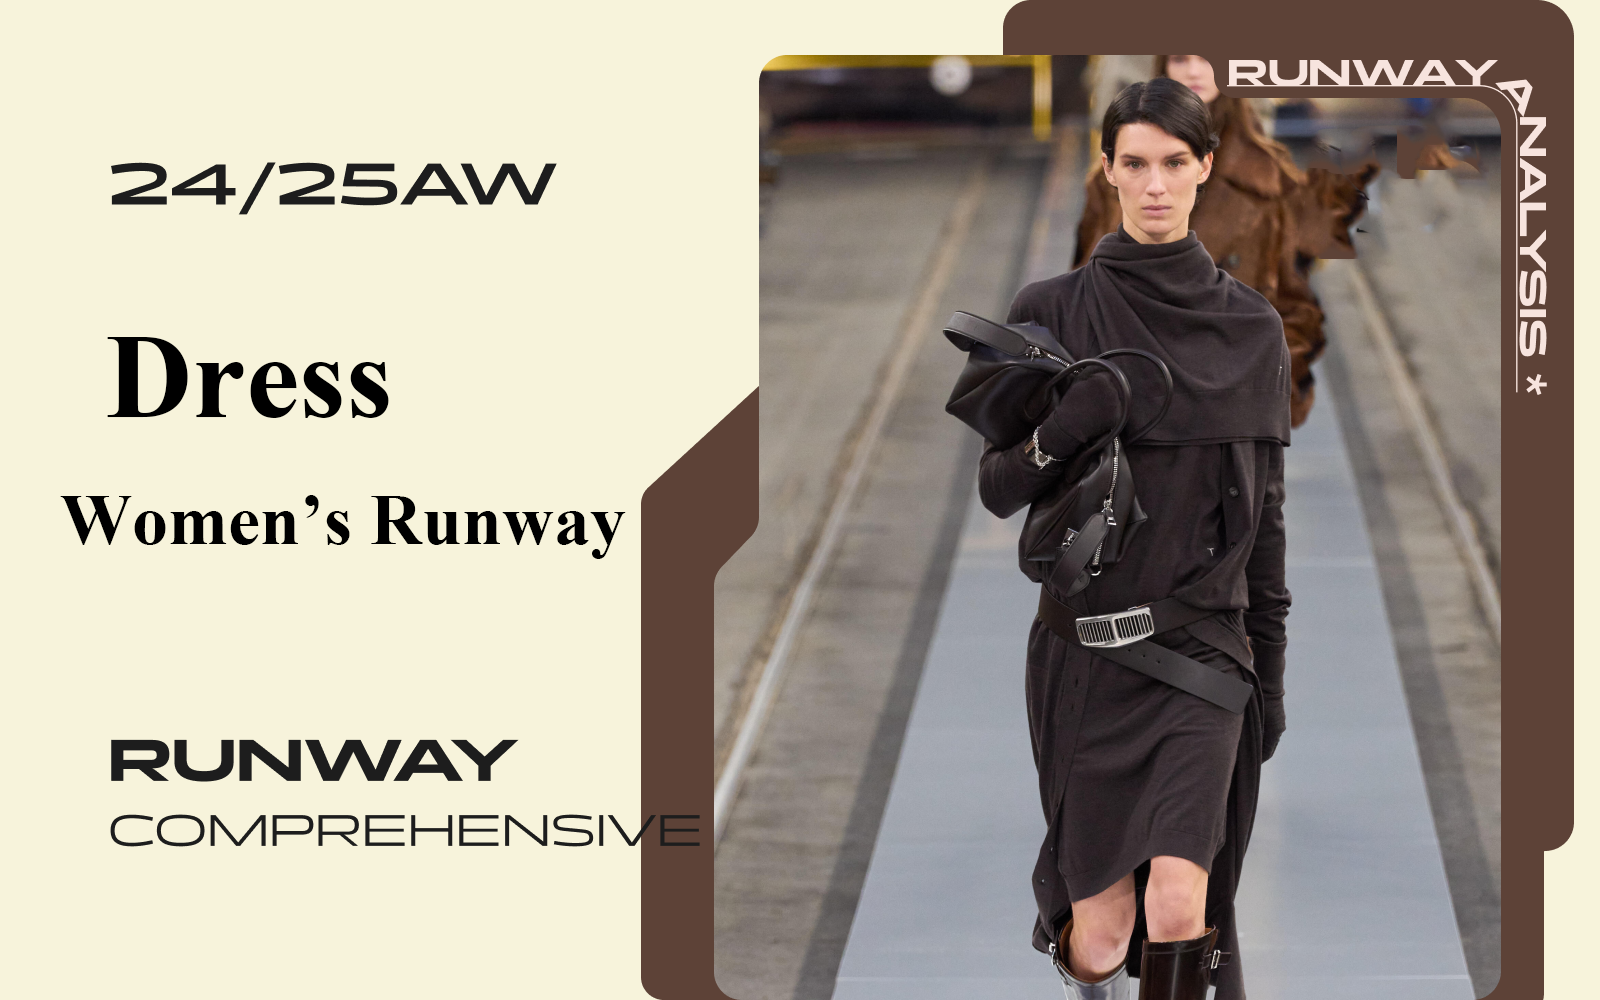 Dress -- The Comprehensive Runway Analysis of Womenswear